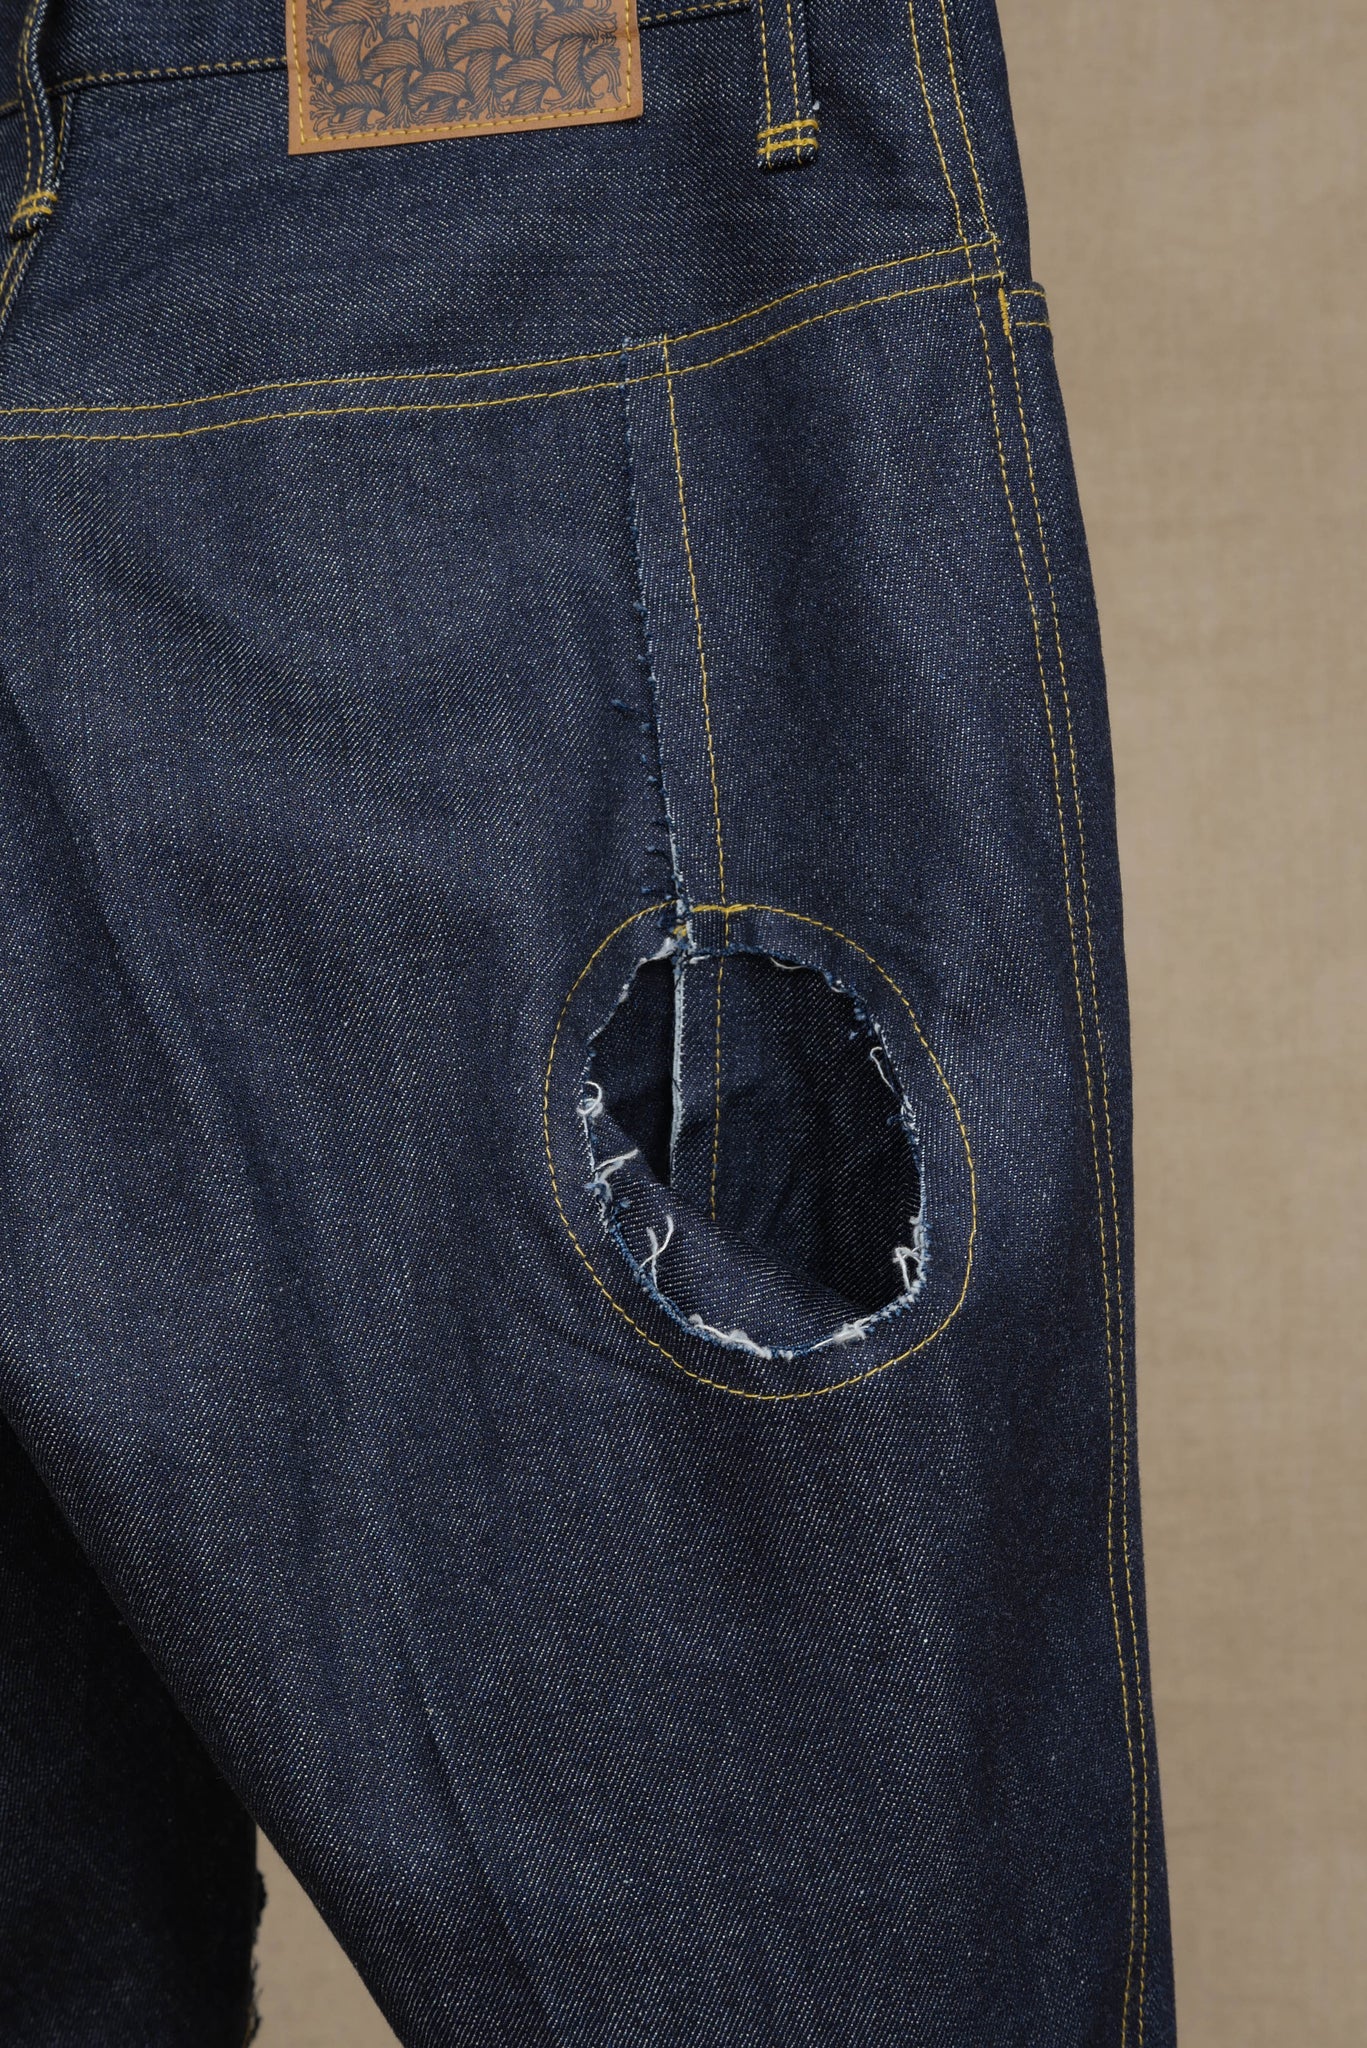 Christopher Nemeth Trousers No.16381 - Blue, 20 Rise Jeans, Clothing -  WNEME20002